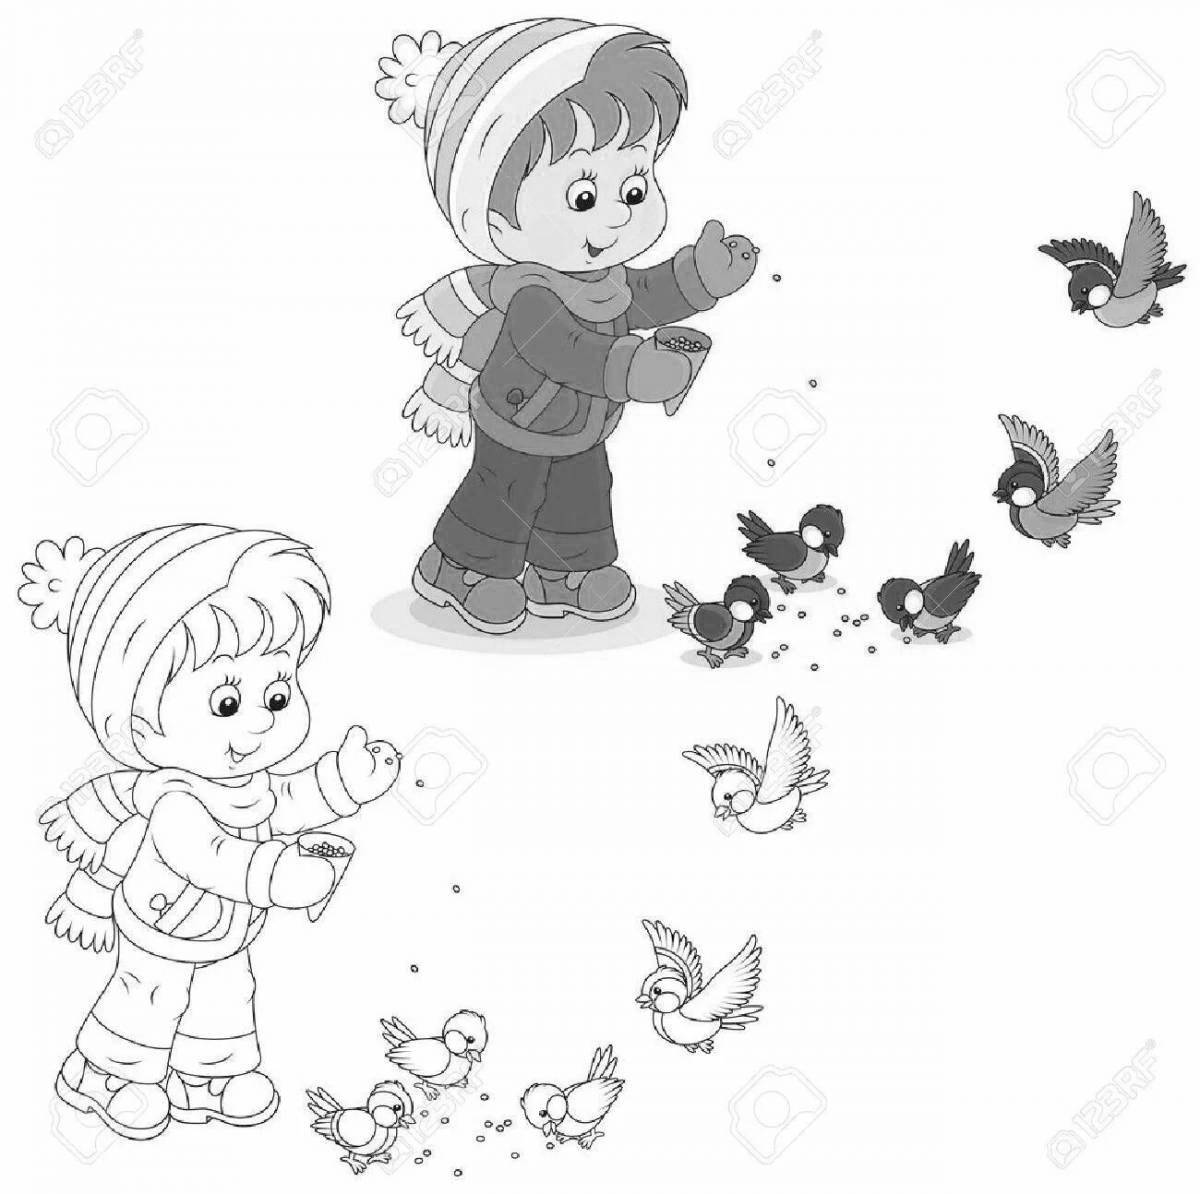 Вдохновляющая тема «покорми птиц зимой» для дошкольников